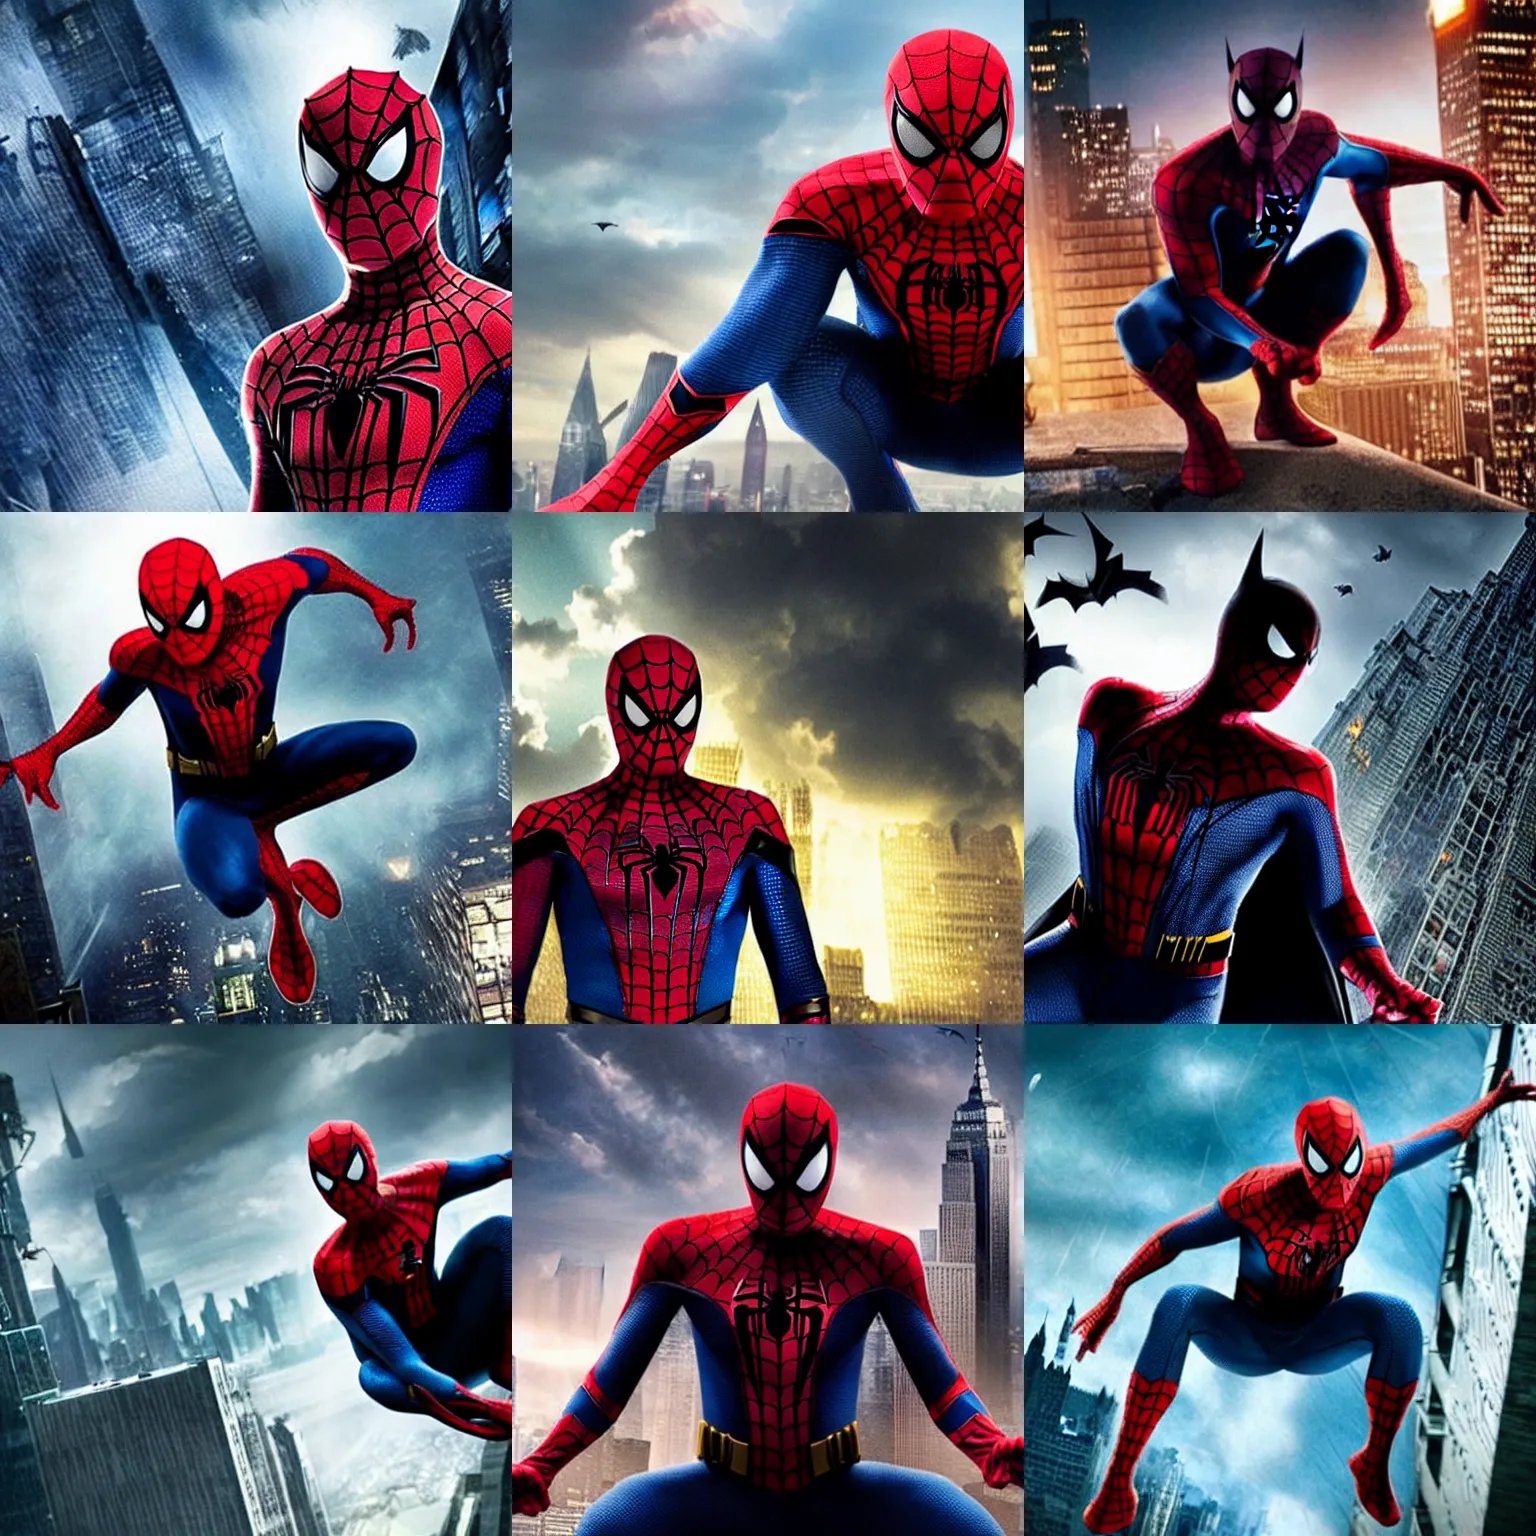 Prompt: spiderman dressed as batman, marvel movie, epic scene, cinematic still